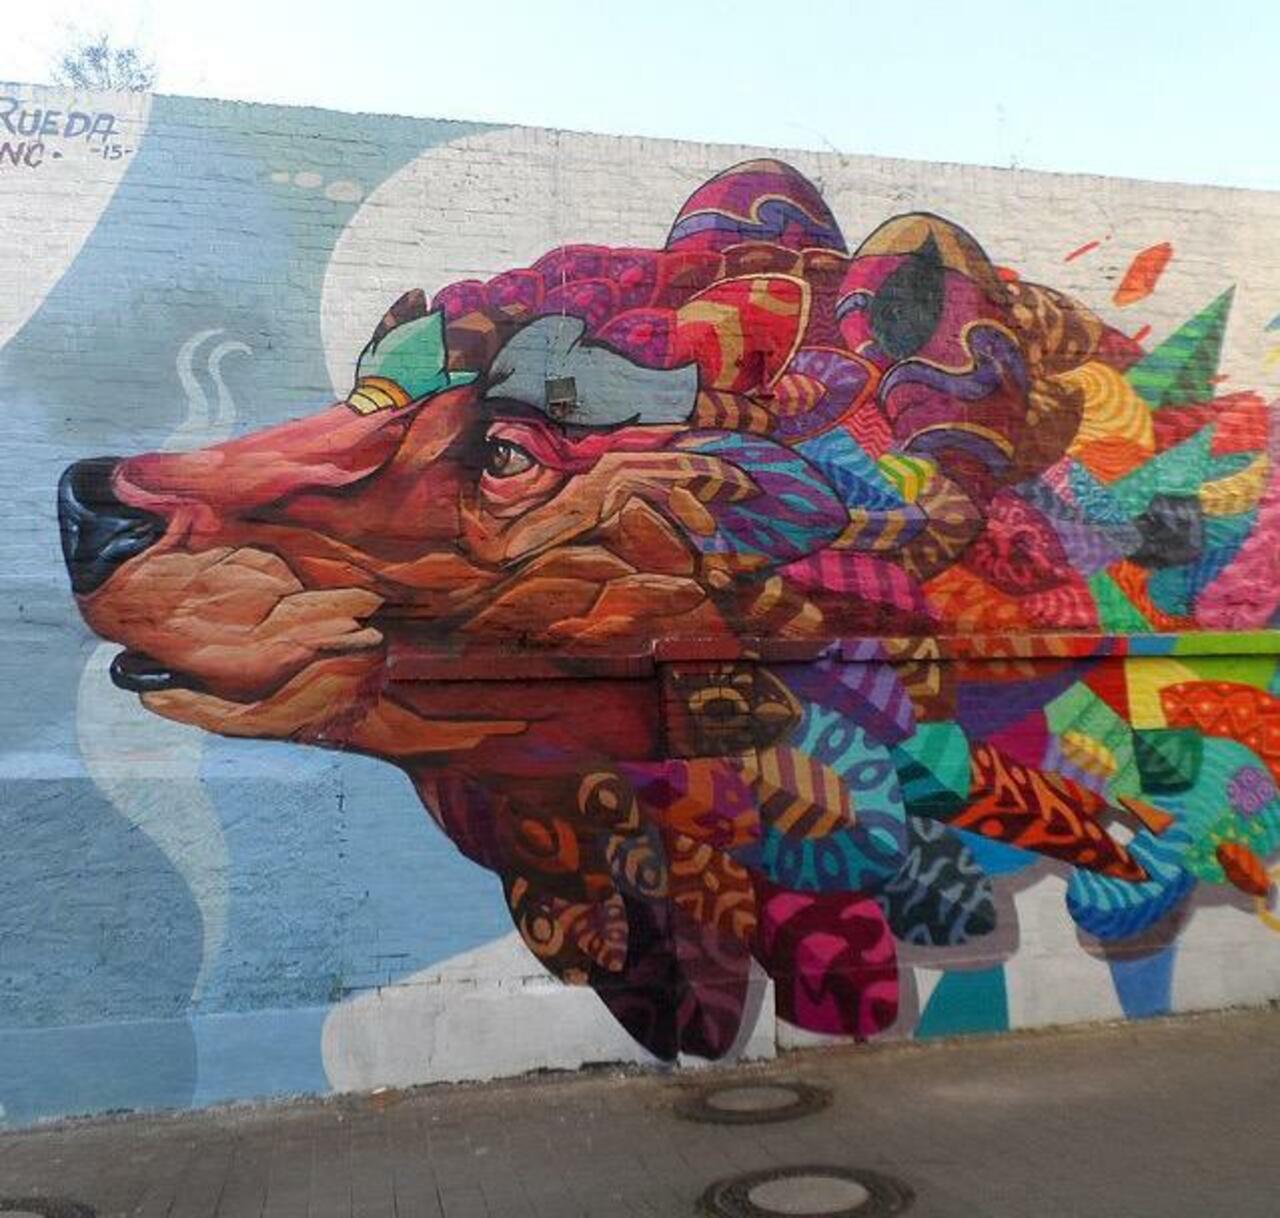 RT @GoogleStreetArt: Farid Rueda Street Art 

#art #graffiti #mural #streetart http://t.co/blRQ5SIPgX